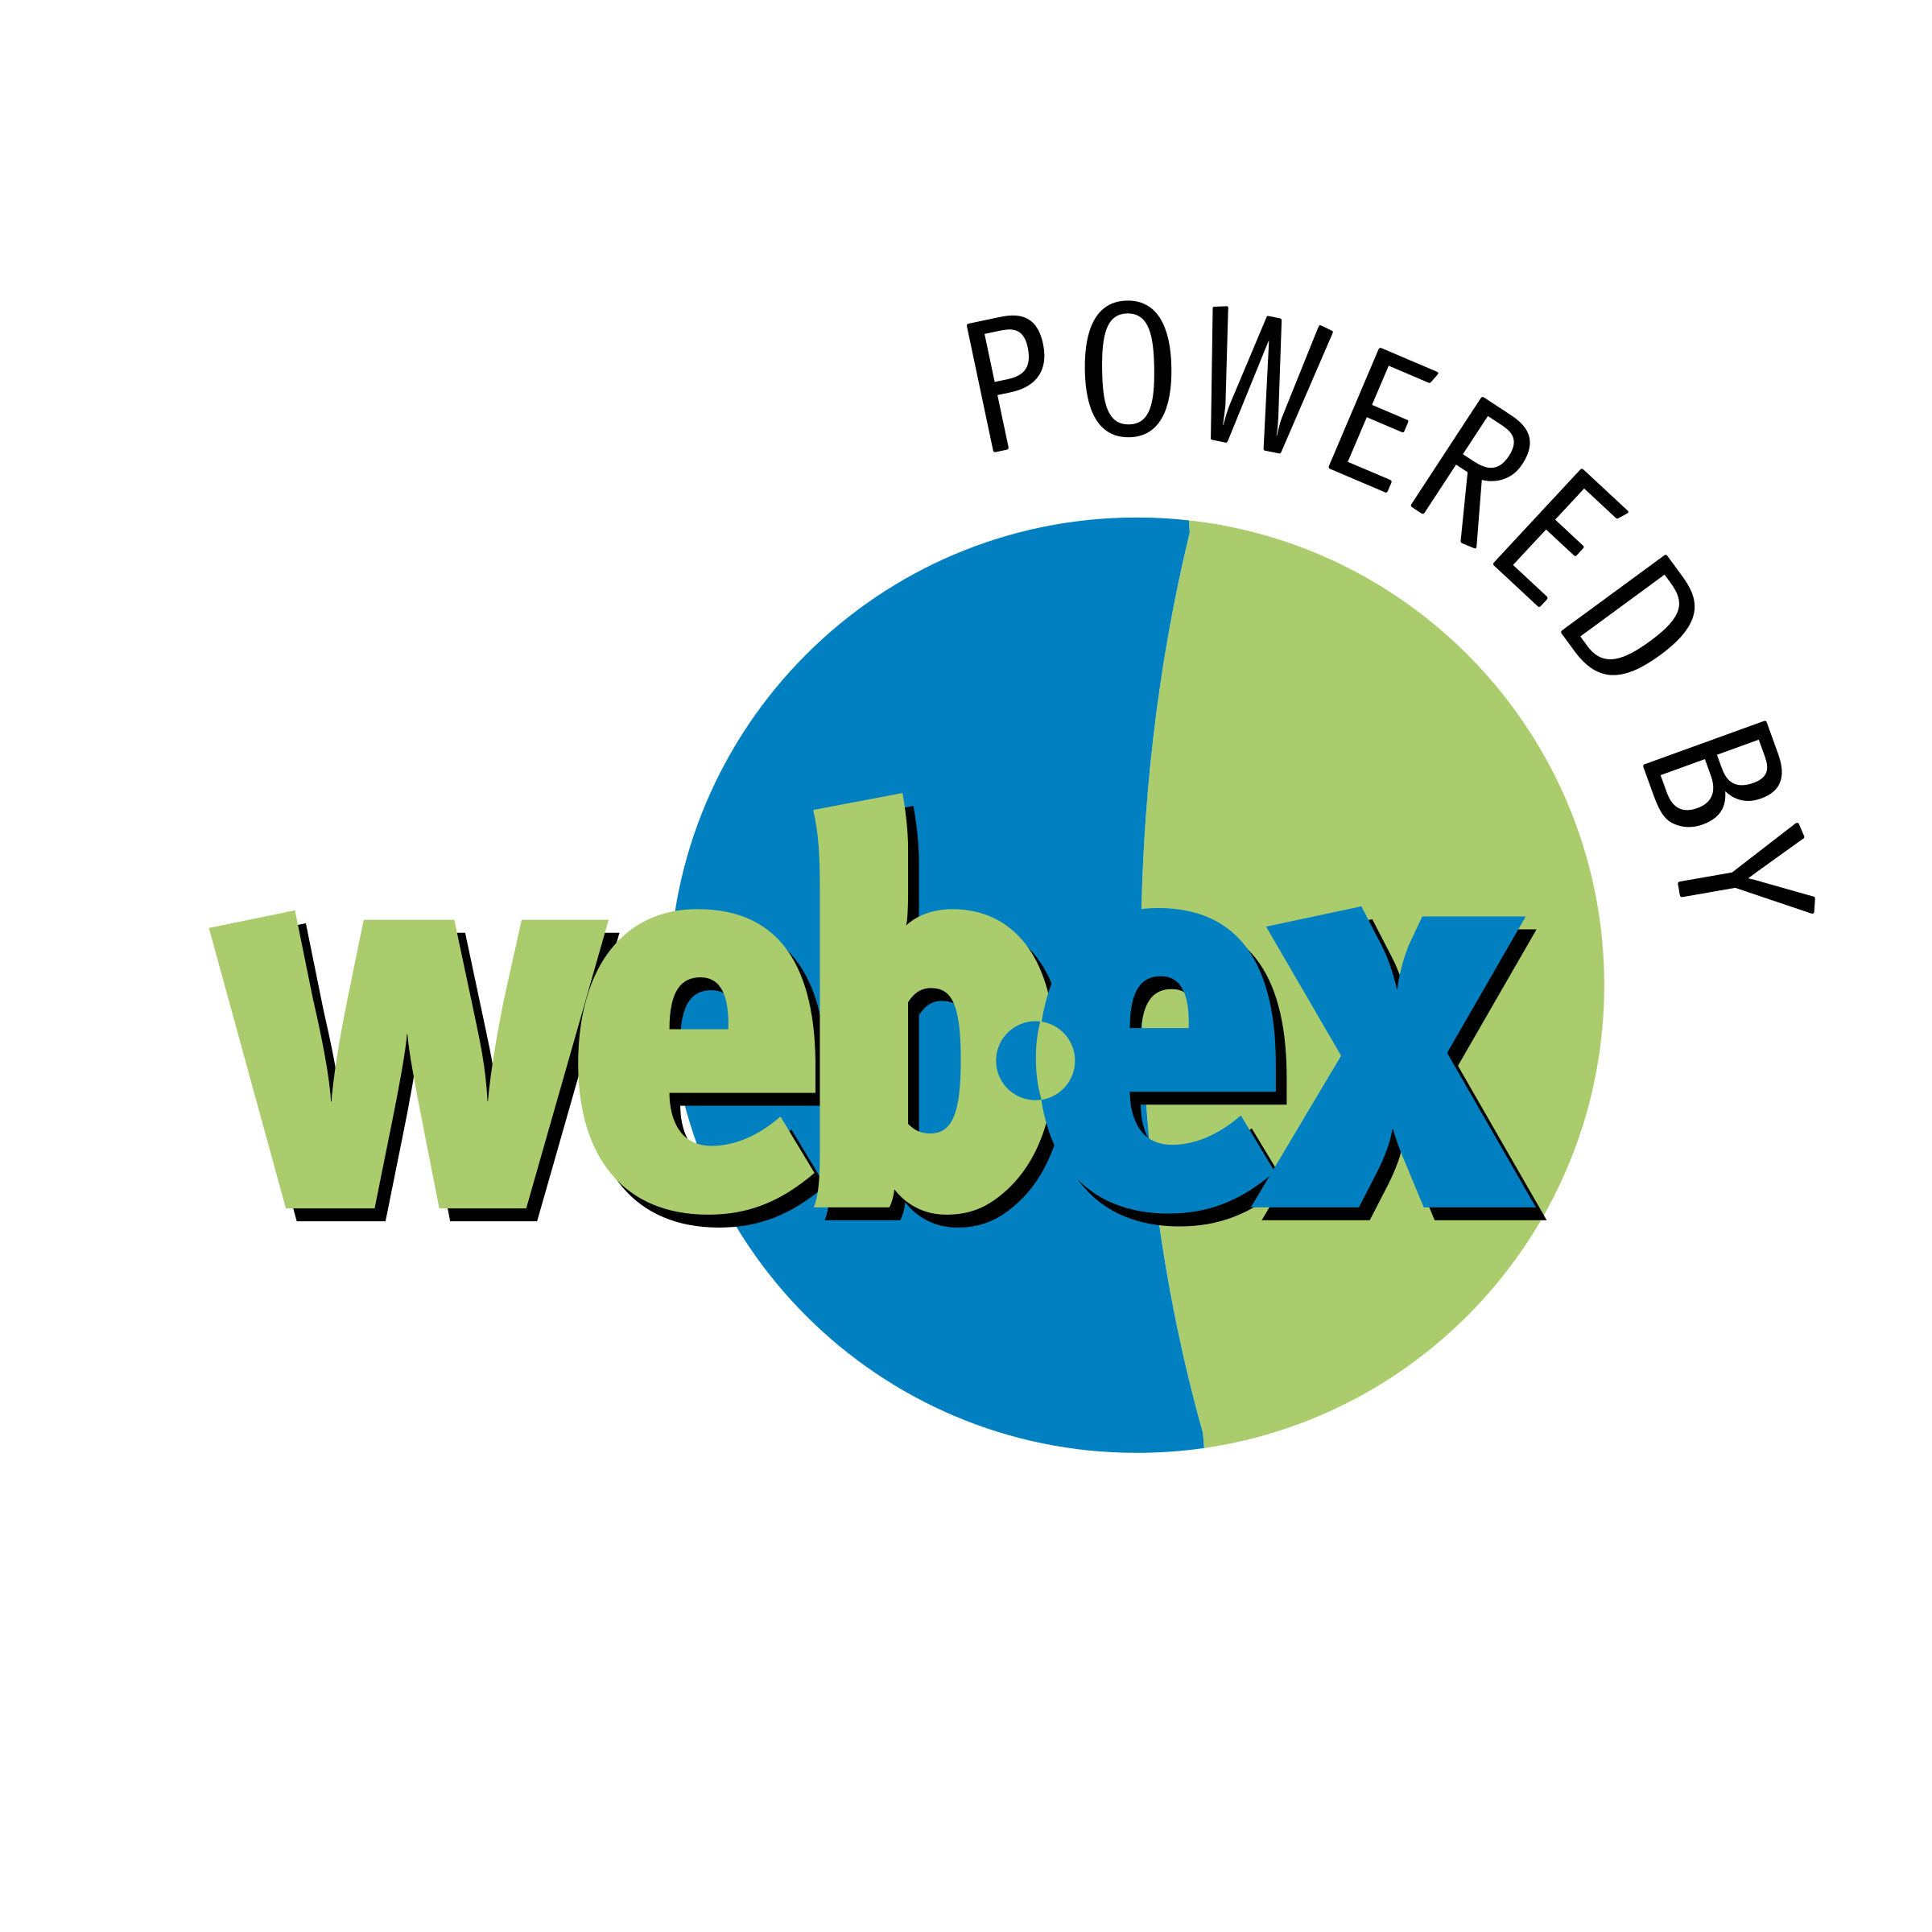 WebEx Logo - Webex Logo PNG Transparent & SVG Vector - Freebie Supply